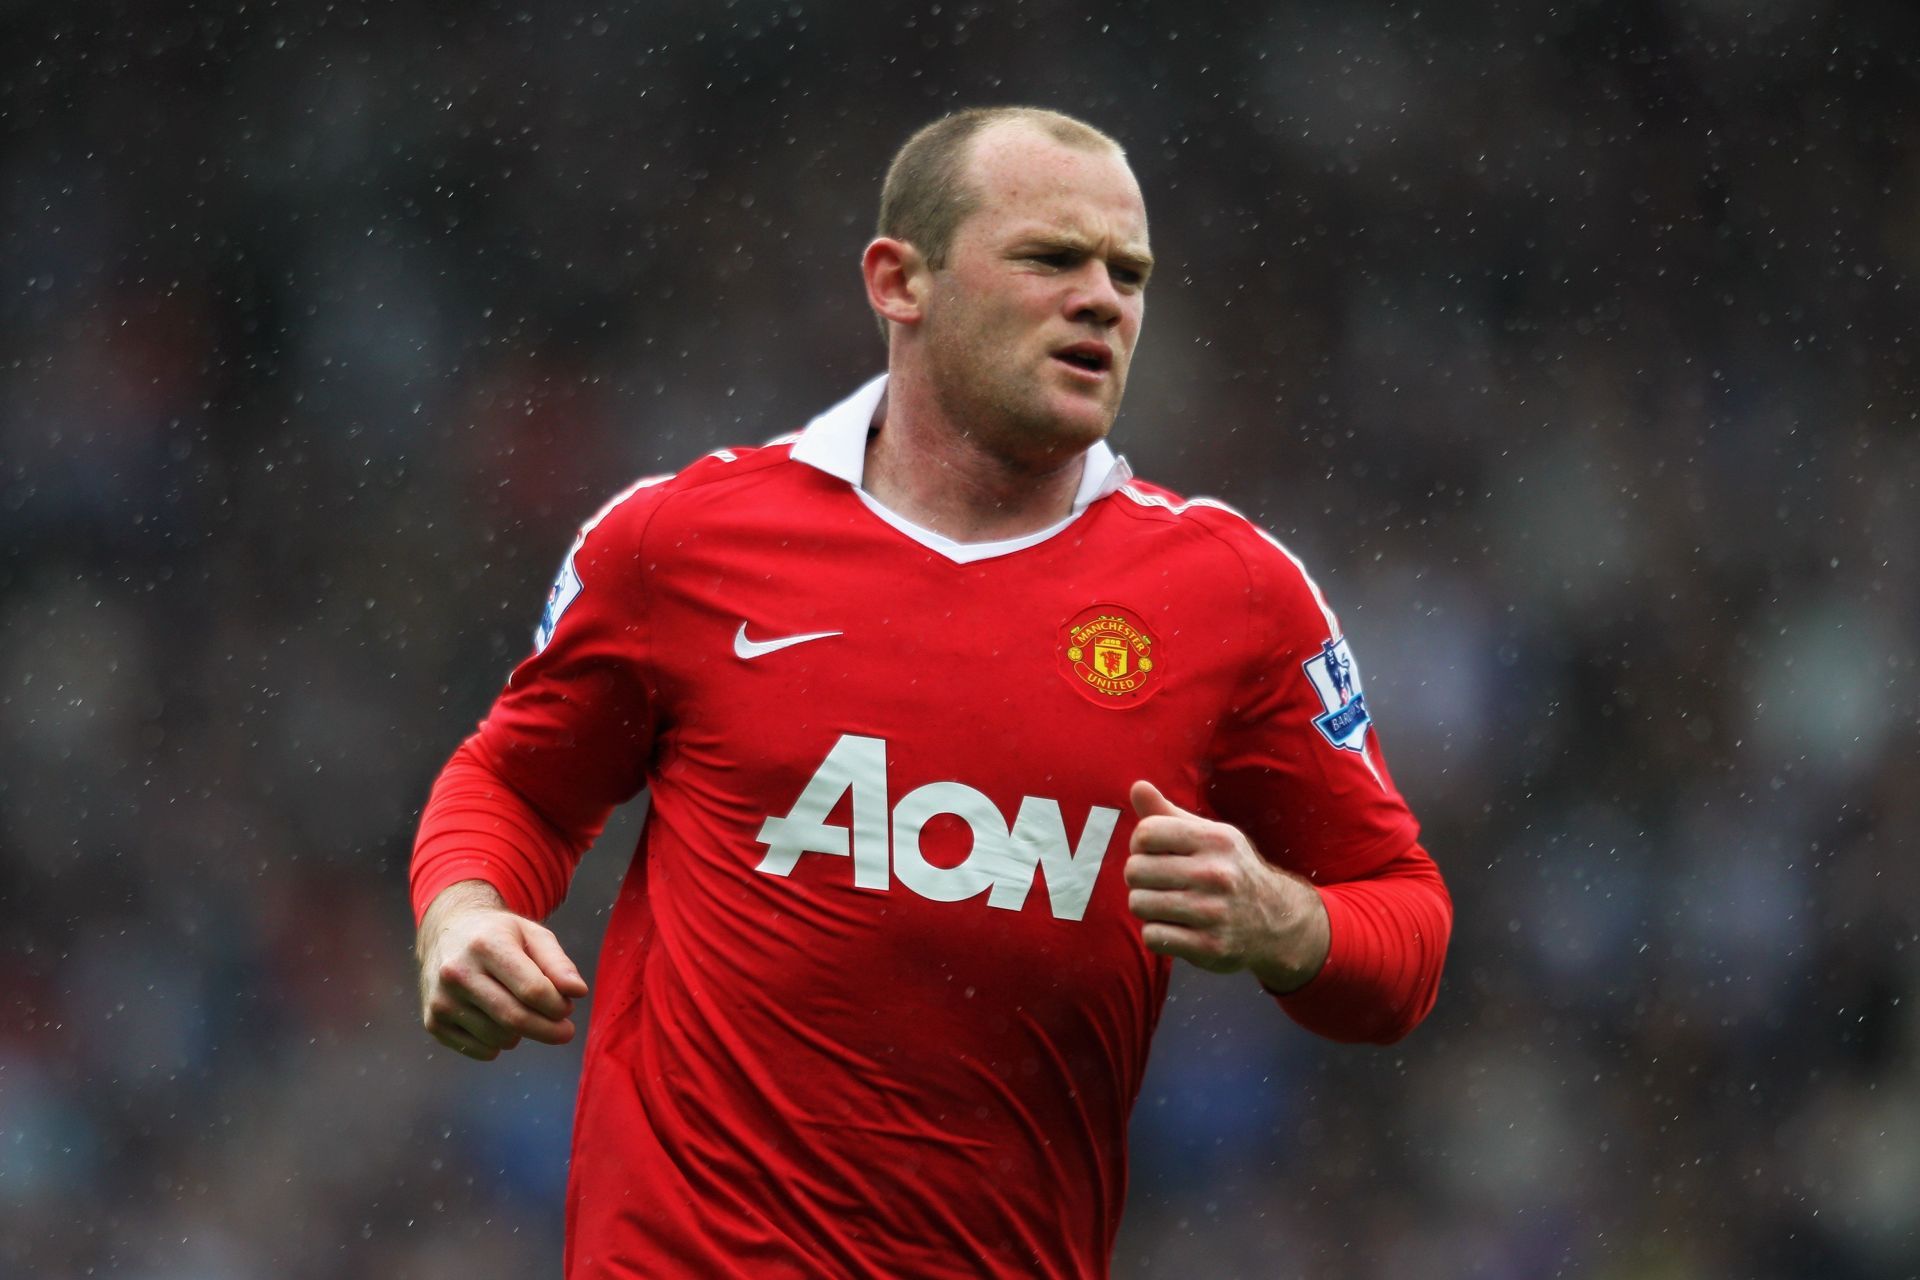 Wayne Rooney scored over 200 goals in the English top flight.